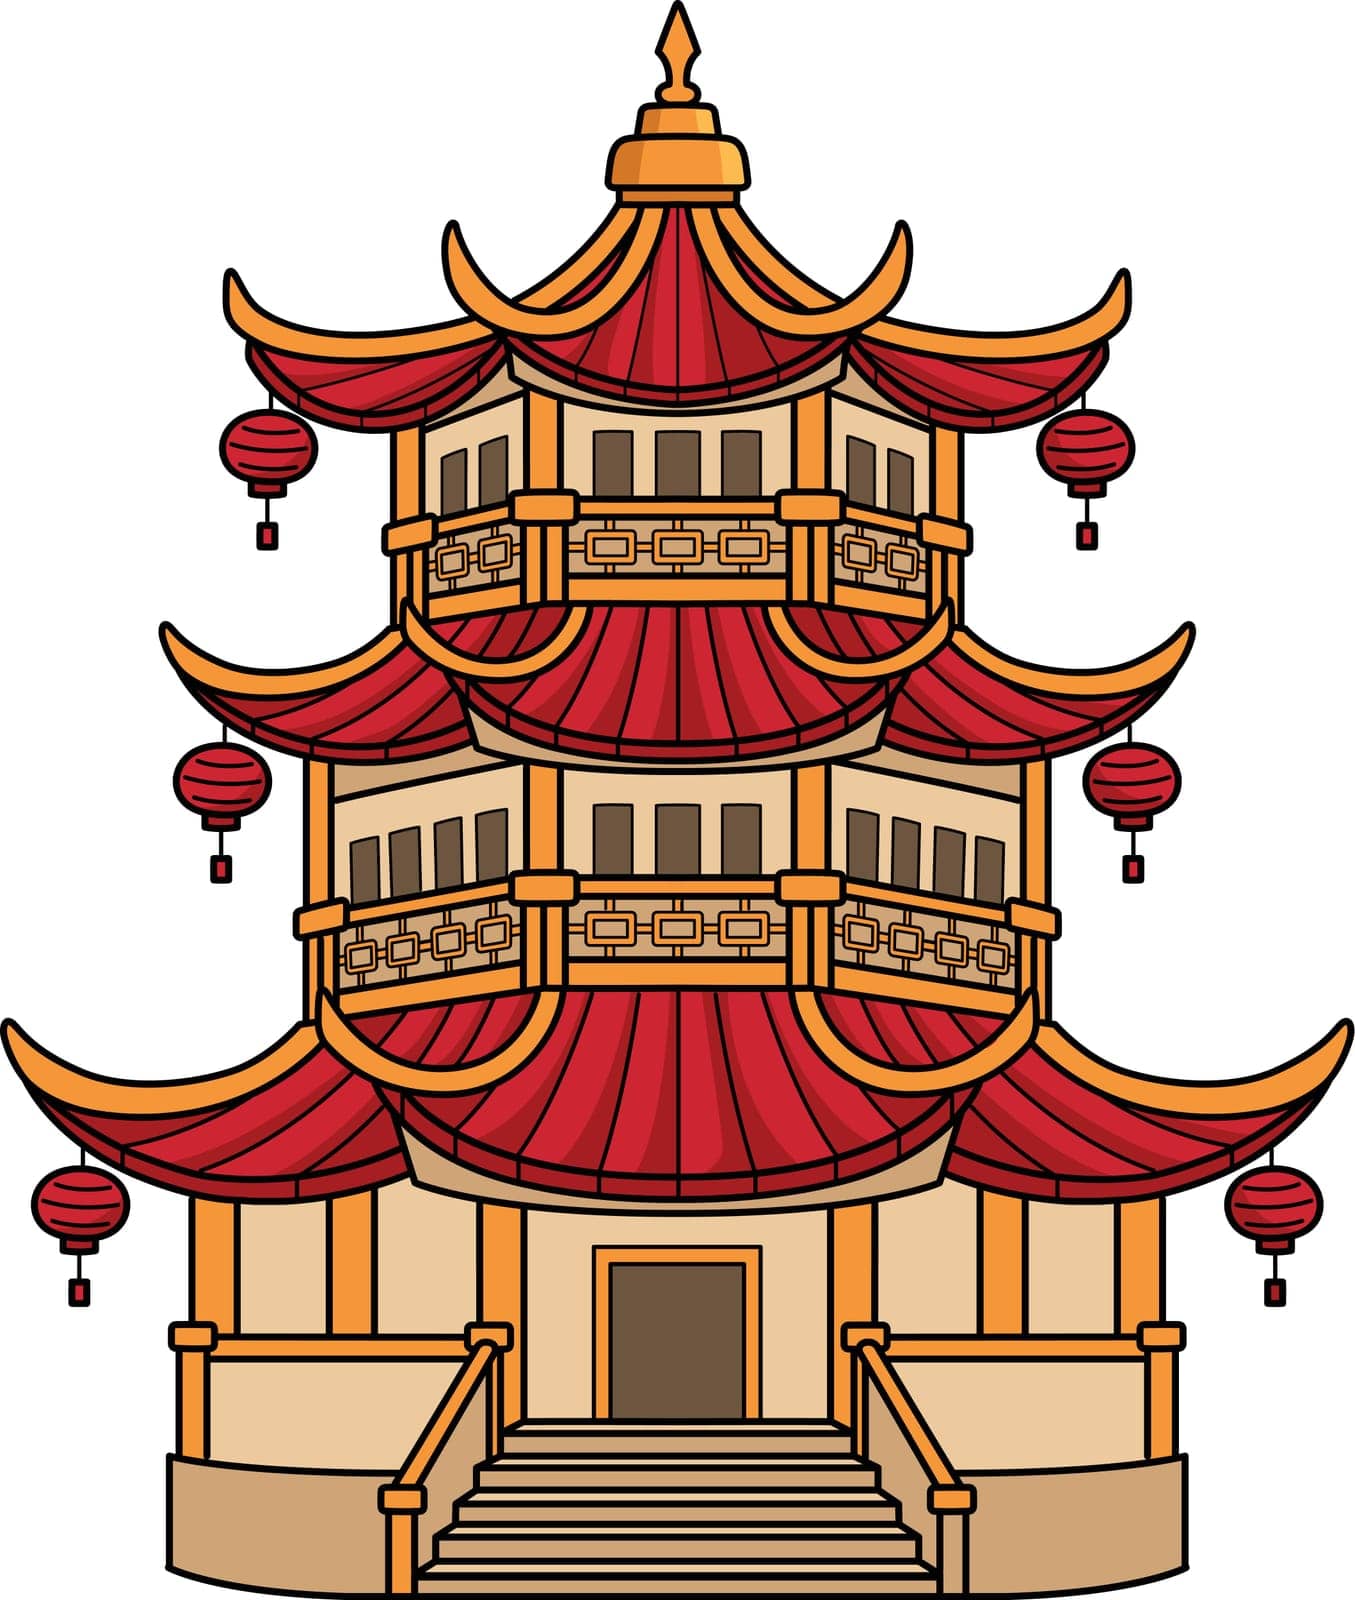 This cartoon clipart shows a Pagoda illustration.